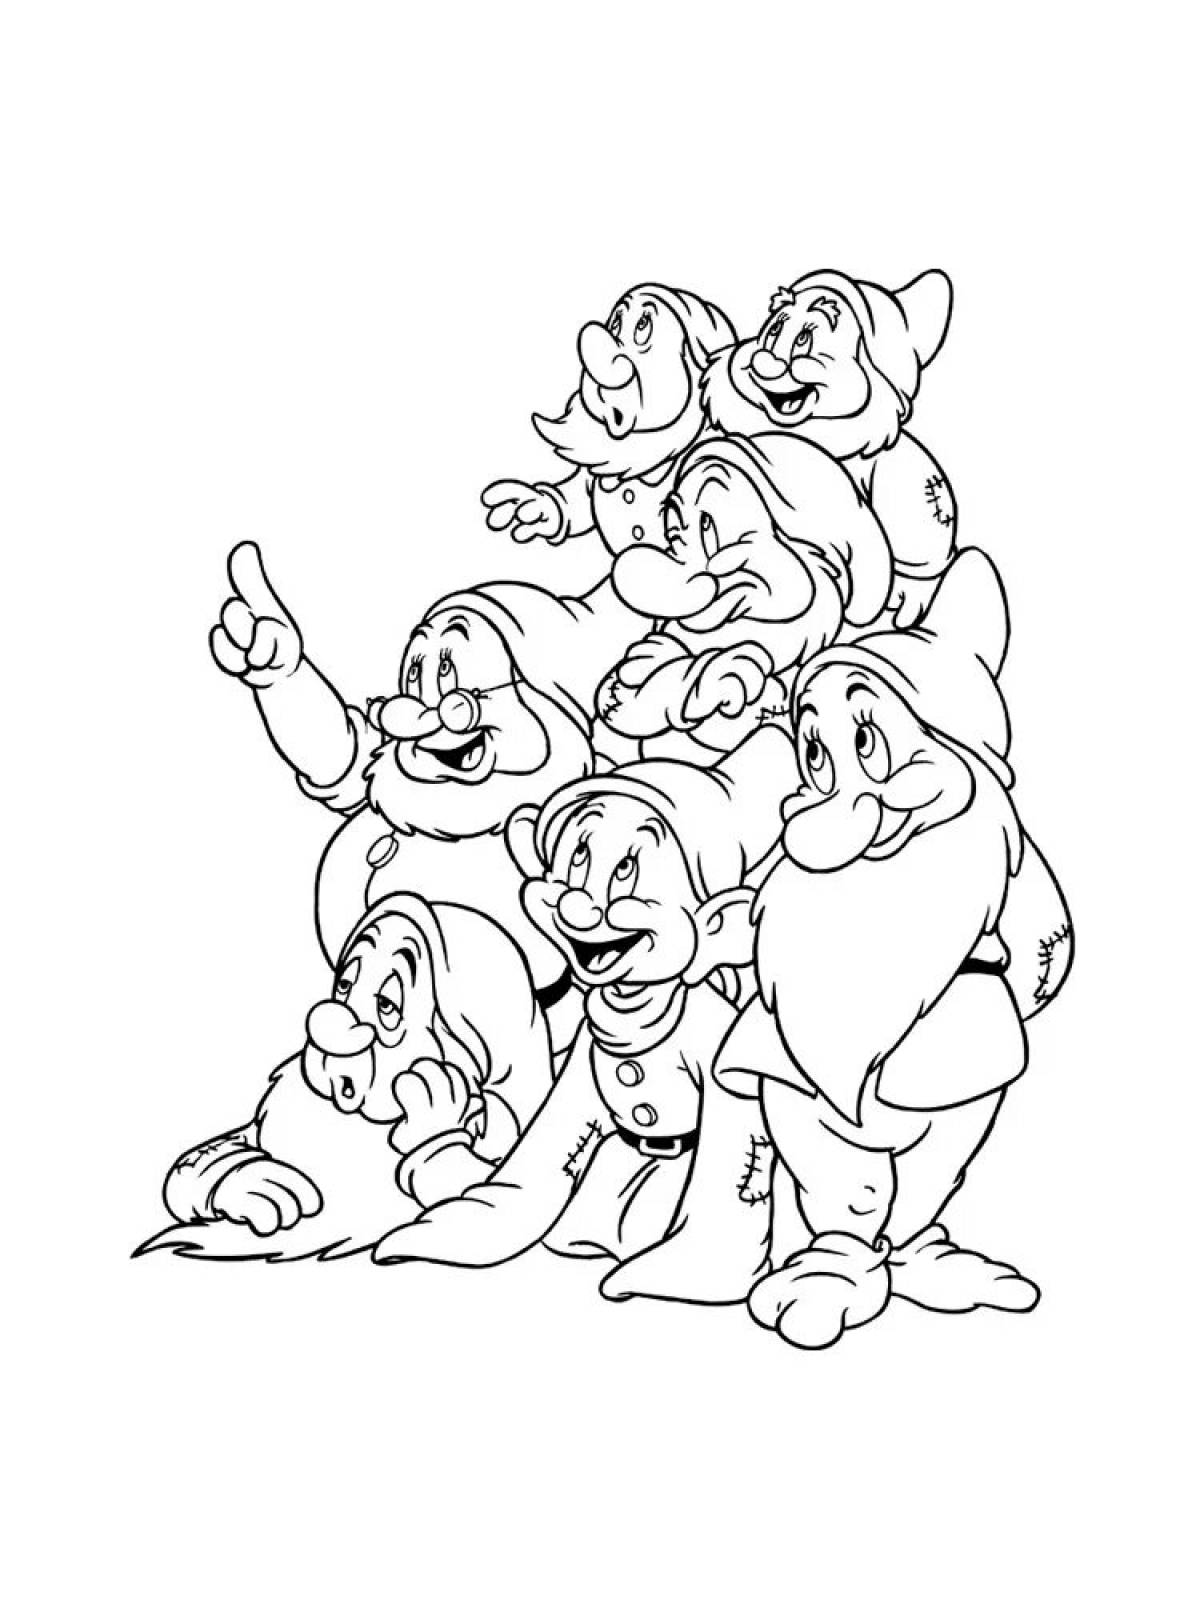 7 dwarfs glamor coloring